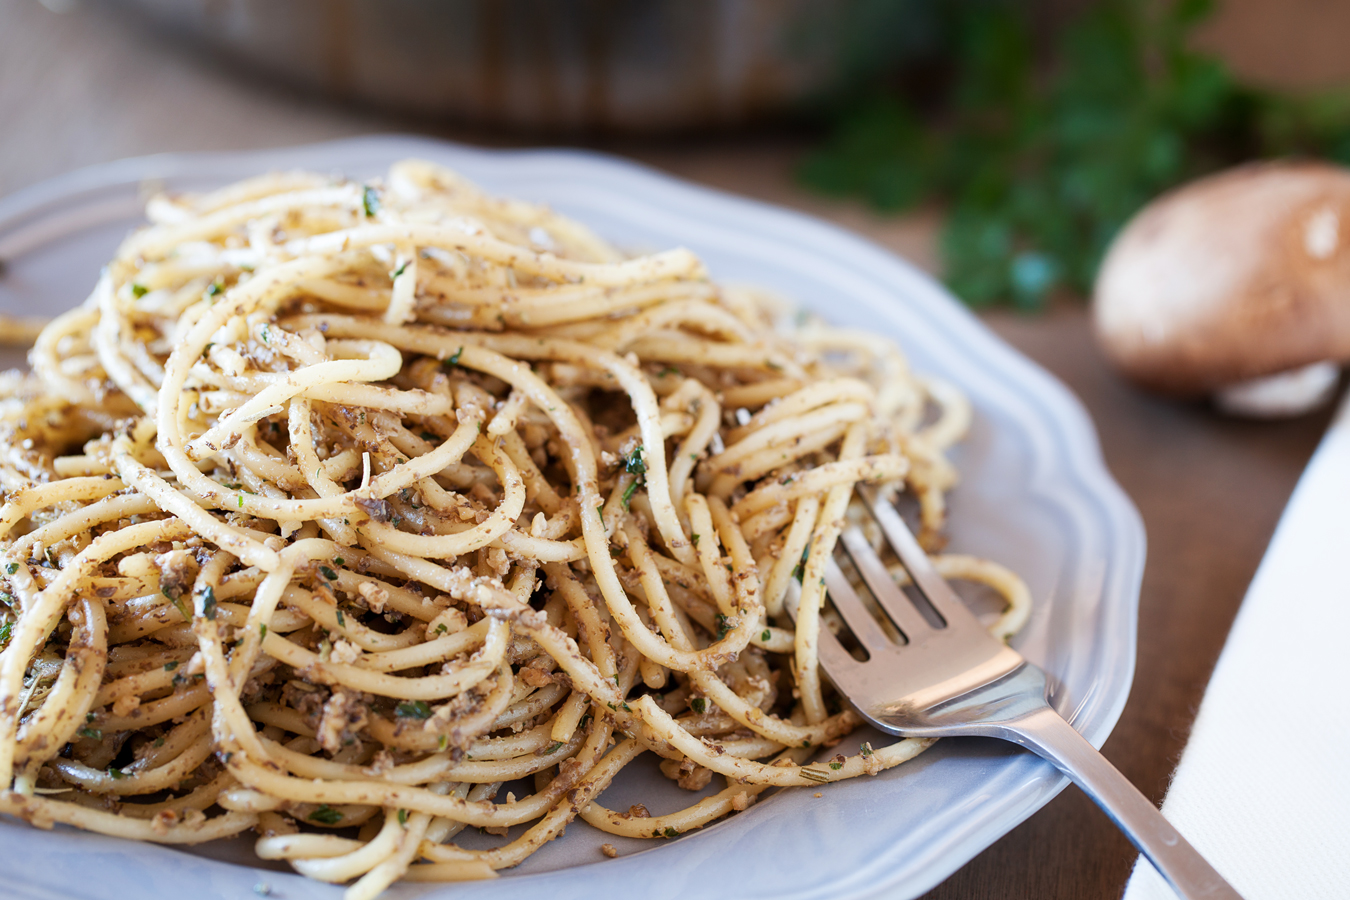 Walnut & Mushroom Pesto - Flavorful, earthy, and impressive enough to be spotted on a fancy schmancy restaurant menu.